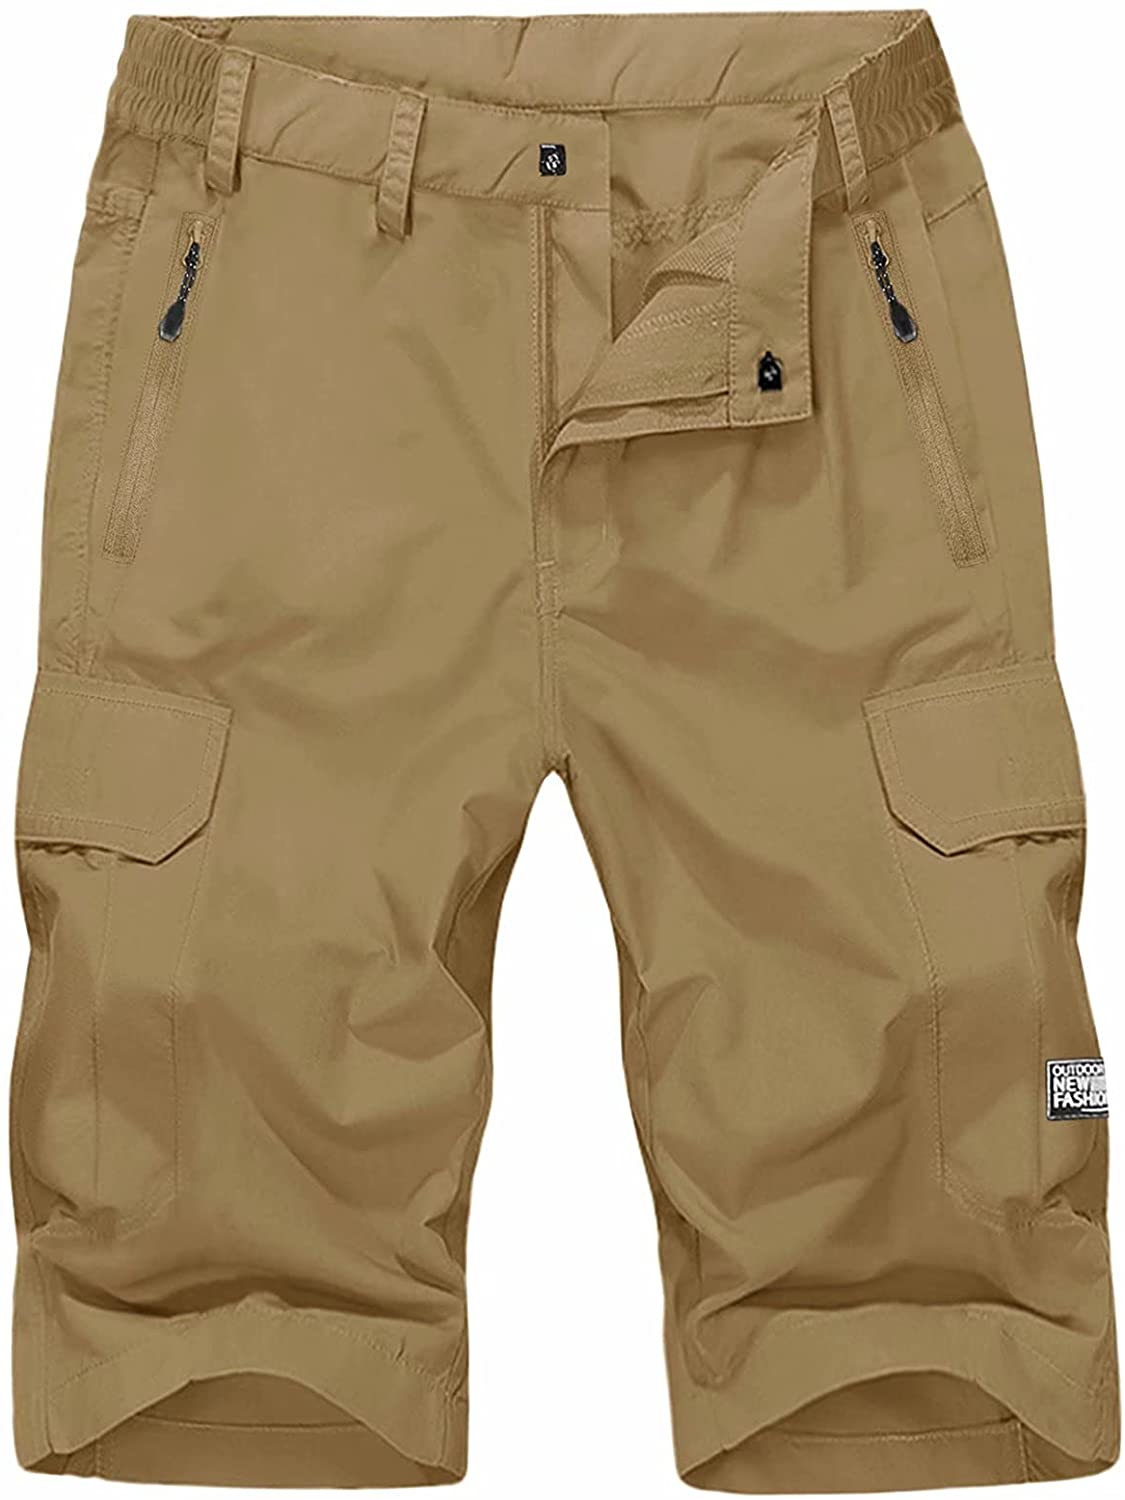 MAGNIVIT Mens Cargo Shorts with 5 Pockets 3/4 Below Knee Hiking Mountain Bike Shorts